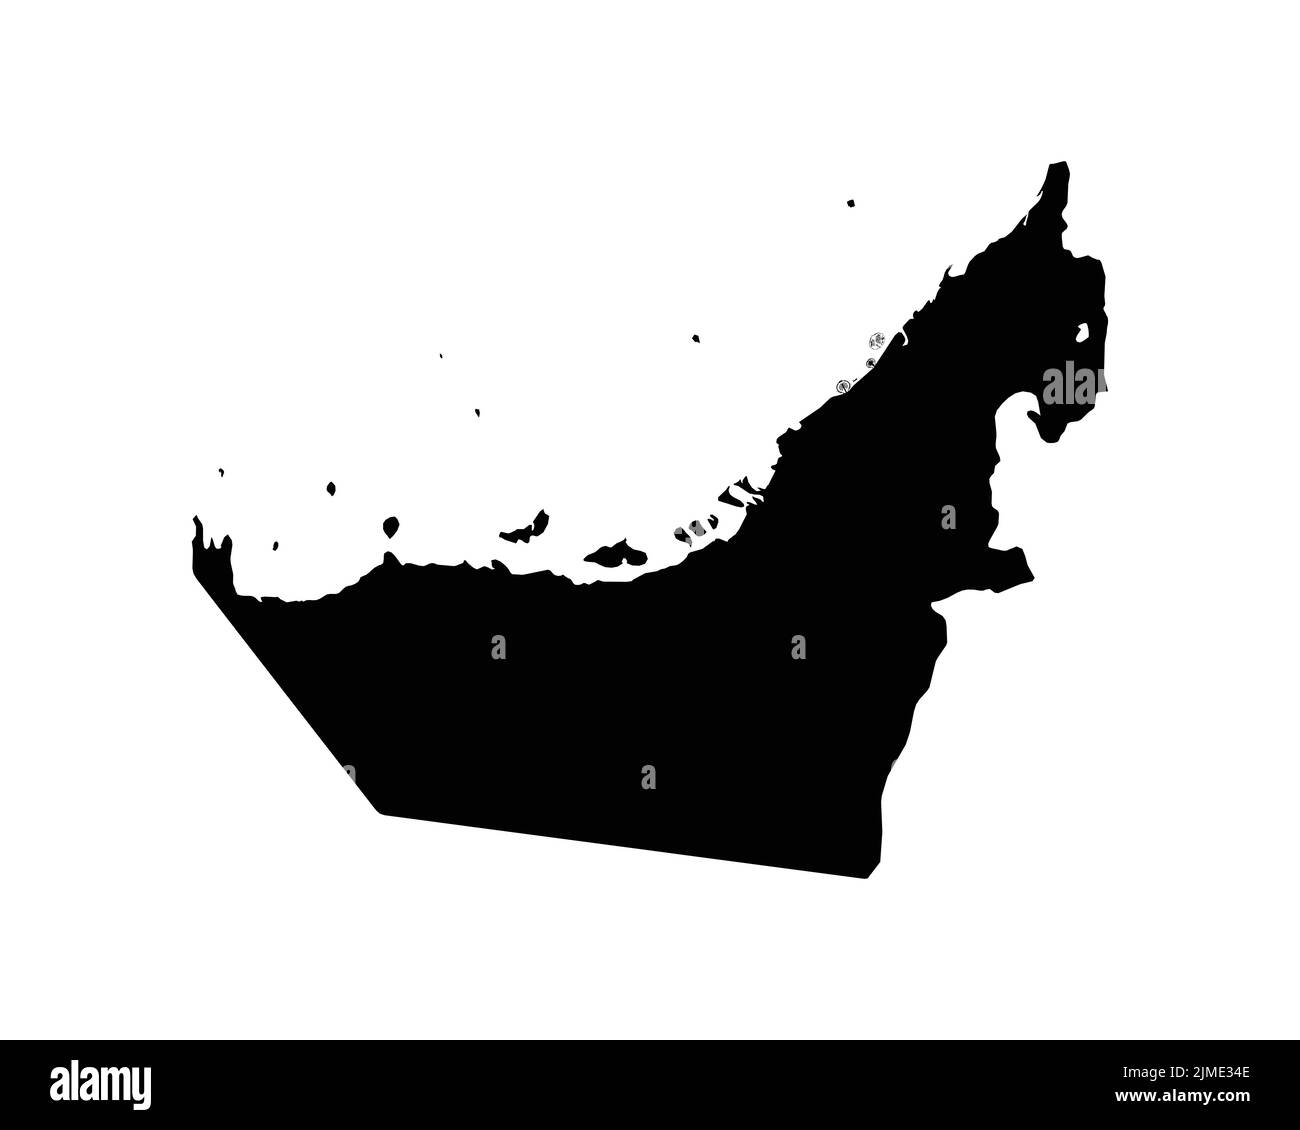 UAE Map. United Arab Emirates Country Map. Black and White Emirati National Nation Geography Outline Border Boundary Territory Shape Vector Illustrati Stock Vector